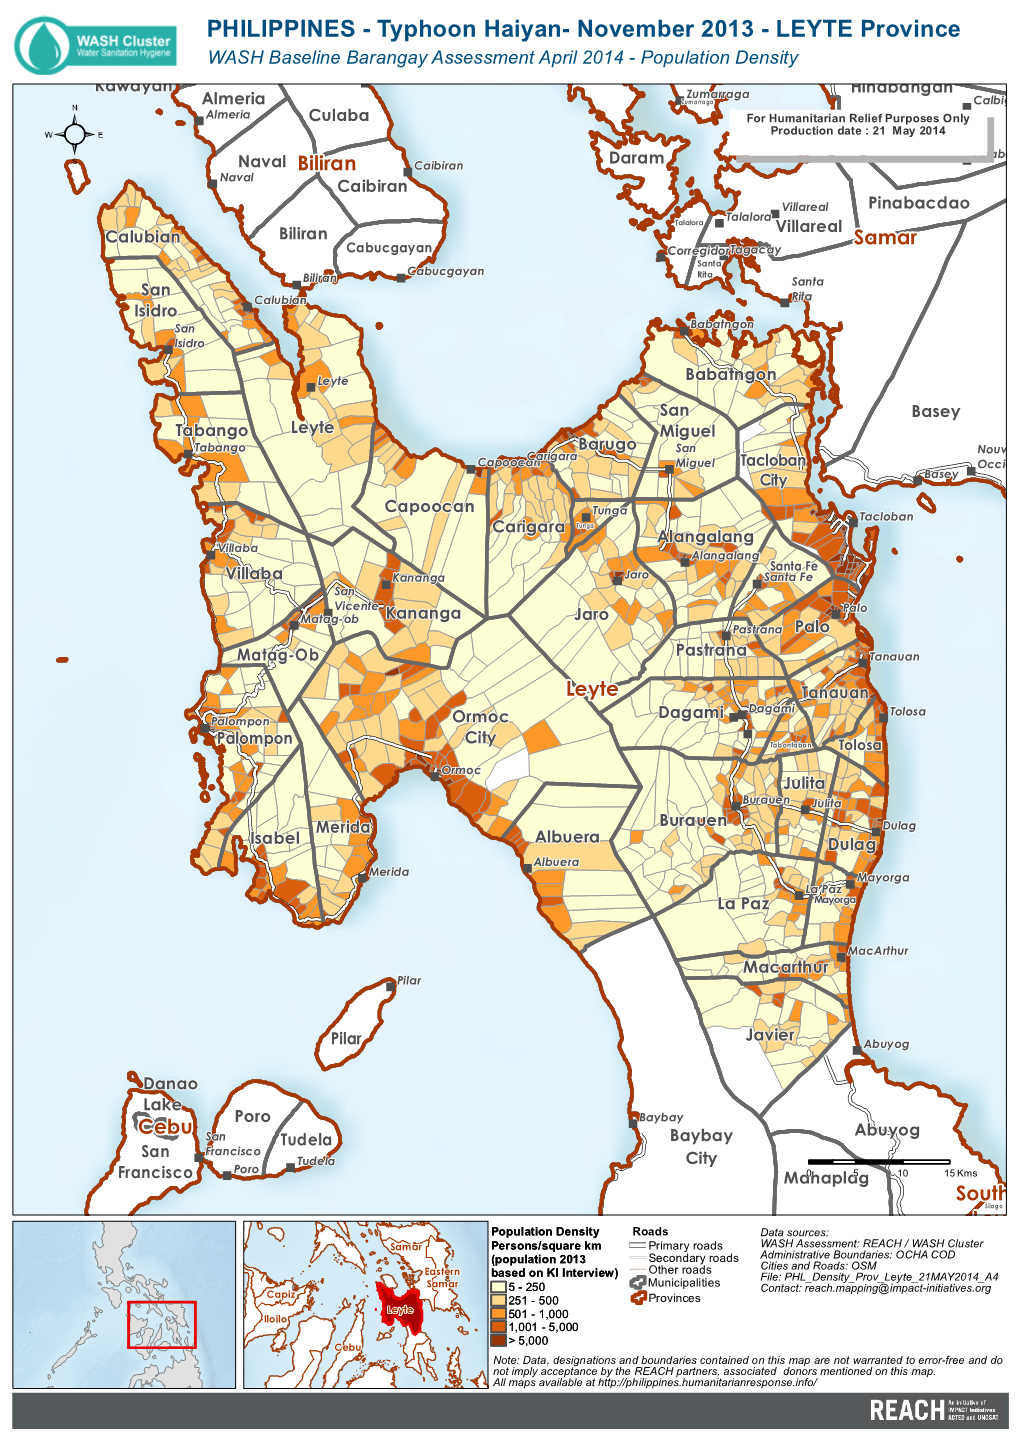 Typhoon Haiyan- November 2013 - LEYTE Province WASH Baseline Barangay Assessment April 2014 - Population Density